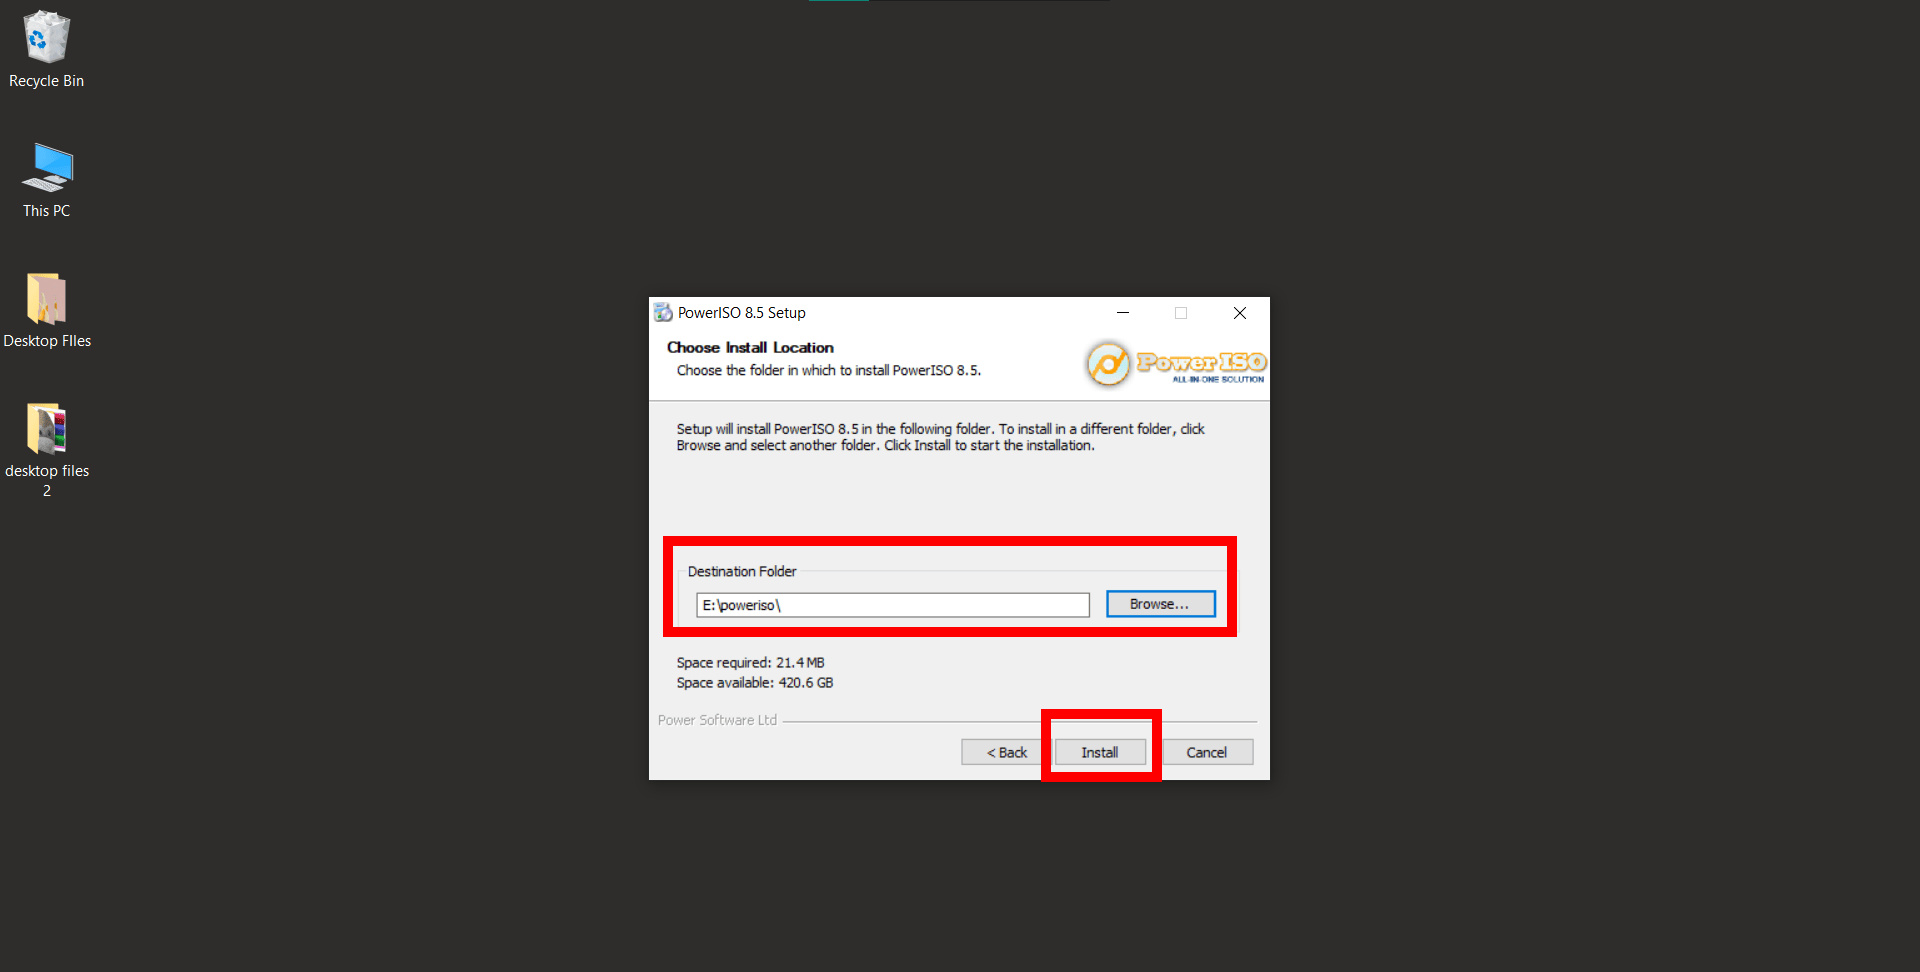 How To Extract BIN Files Using PowerISO on Windows: Step 1